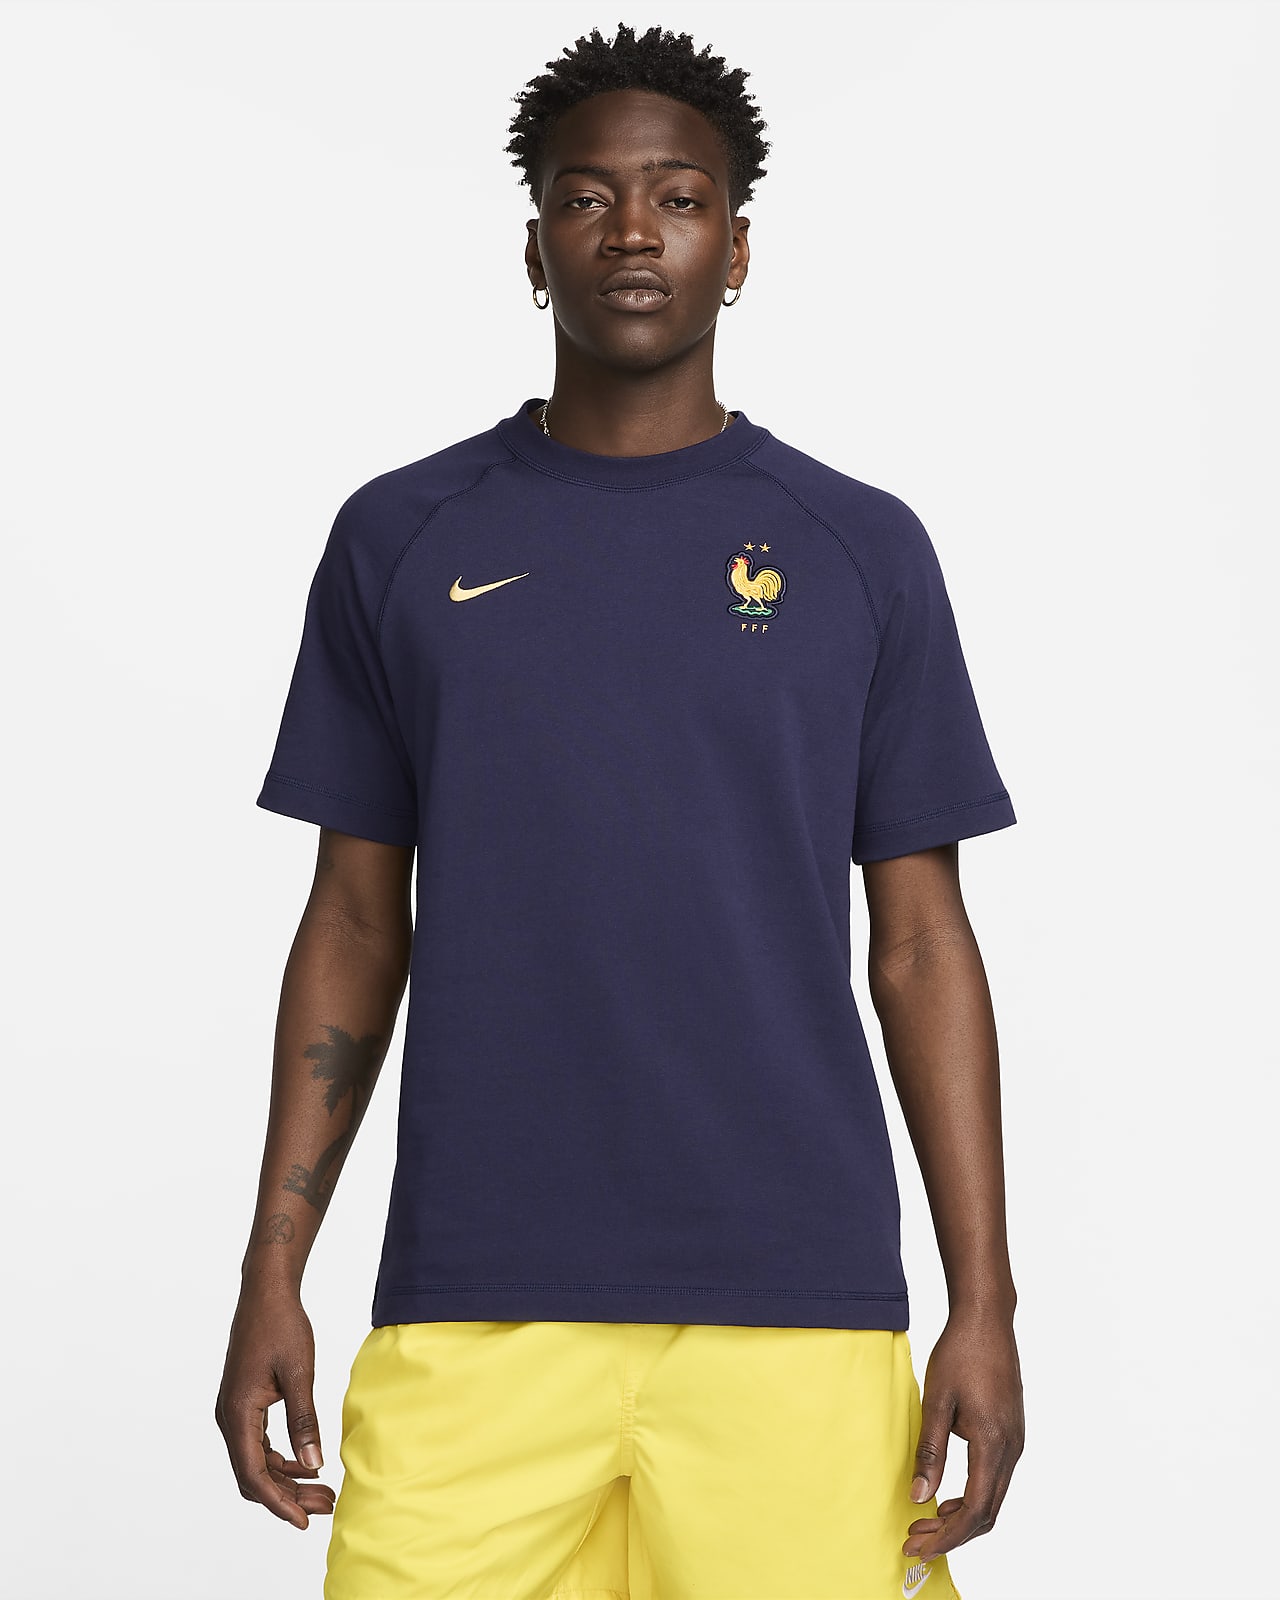 FFF Travel Nike Football Short-Sleeve Top